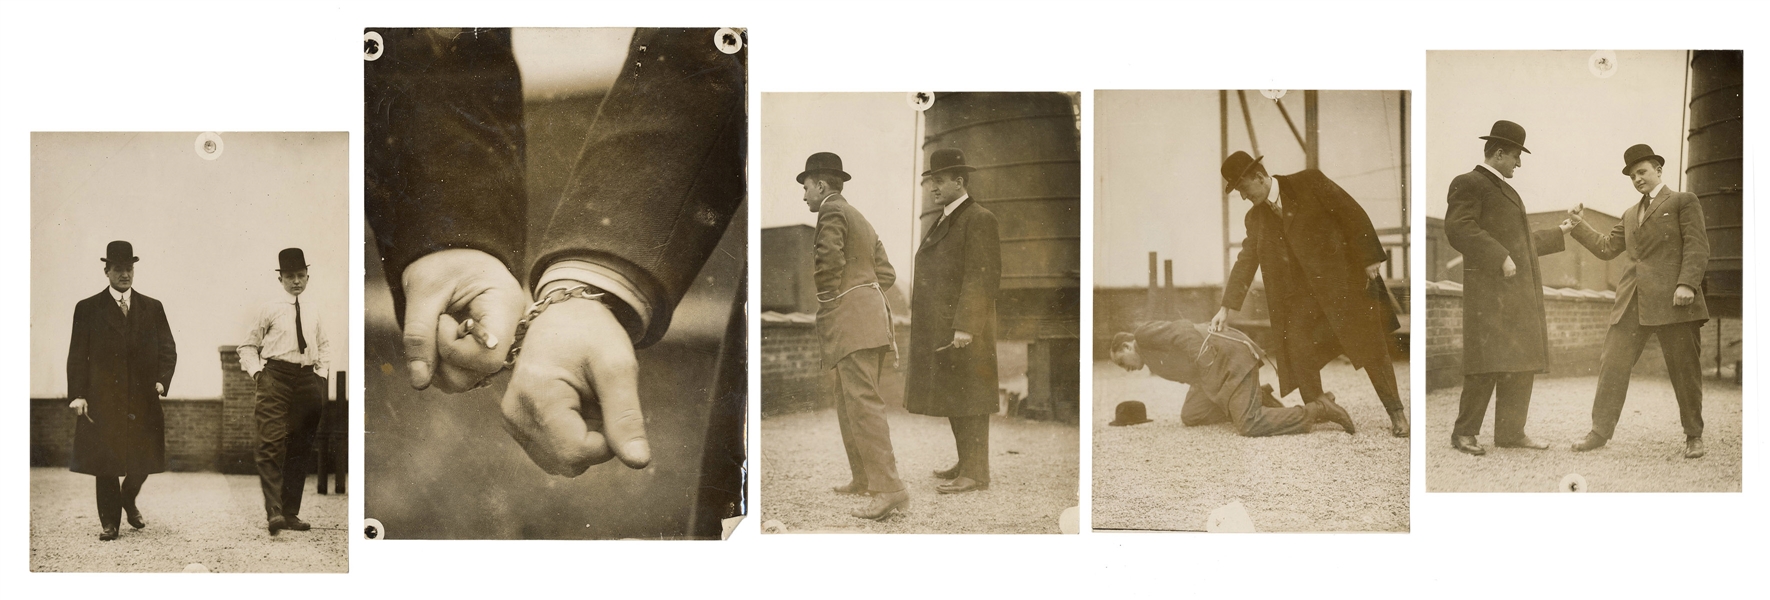  [POLICE]. Five Photographs of Handcuffs Alternatives. Phila...